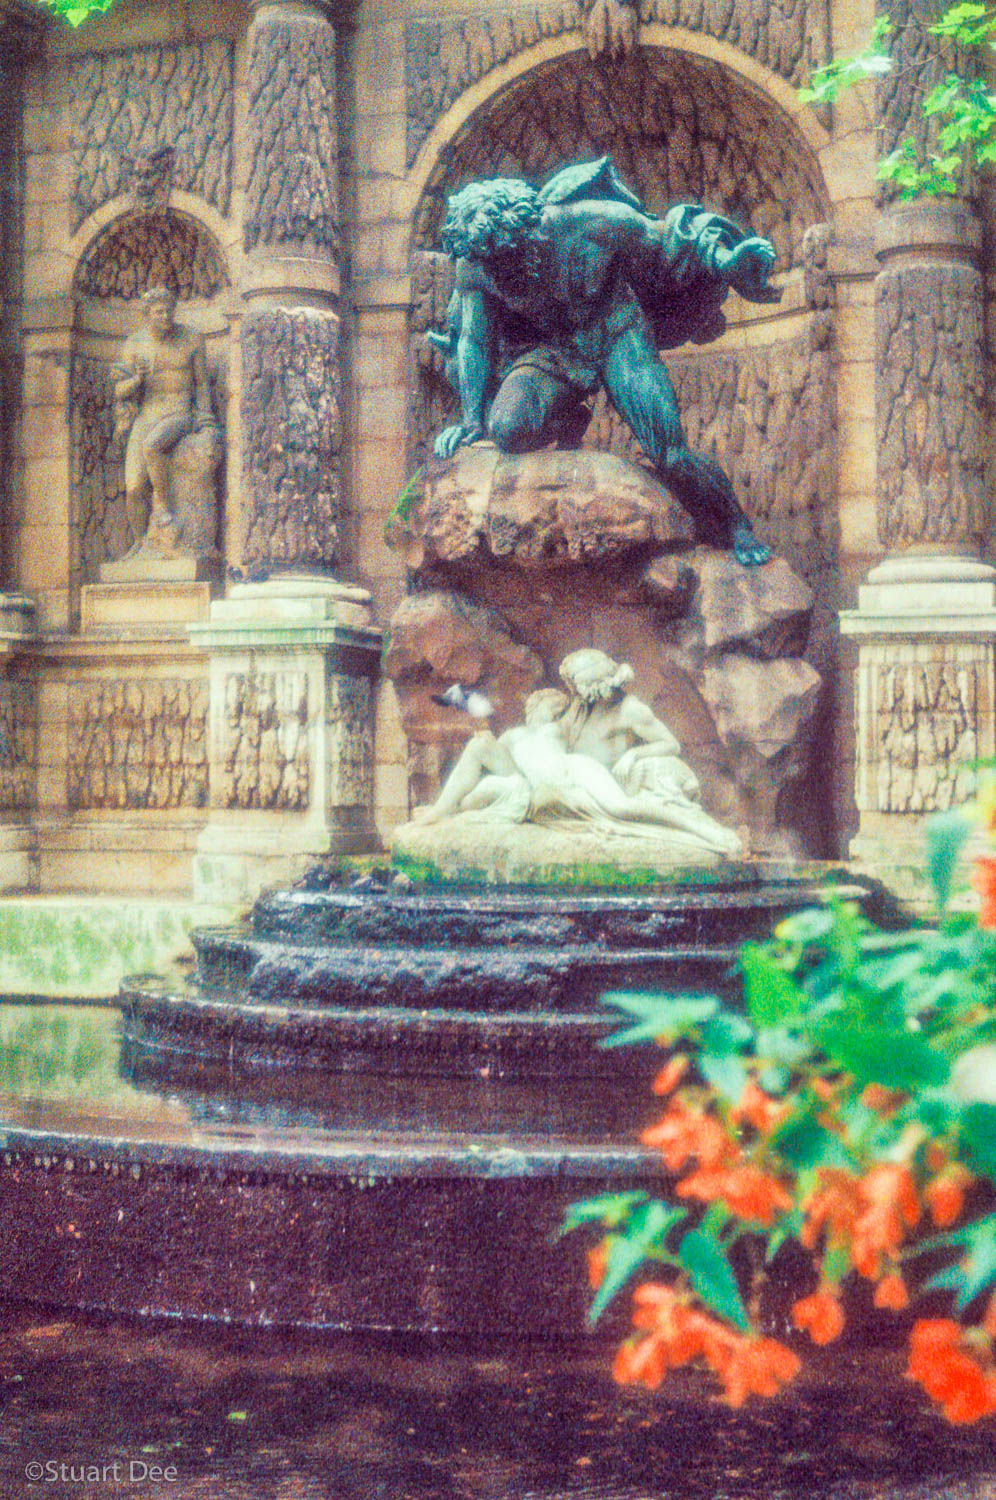  Fontaine De Medici, Jardin Du Luxembourg, Paris, France 